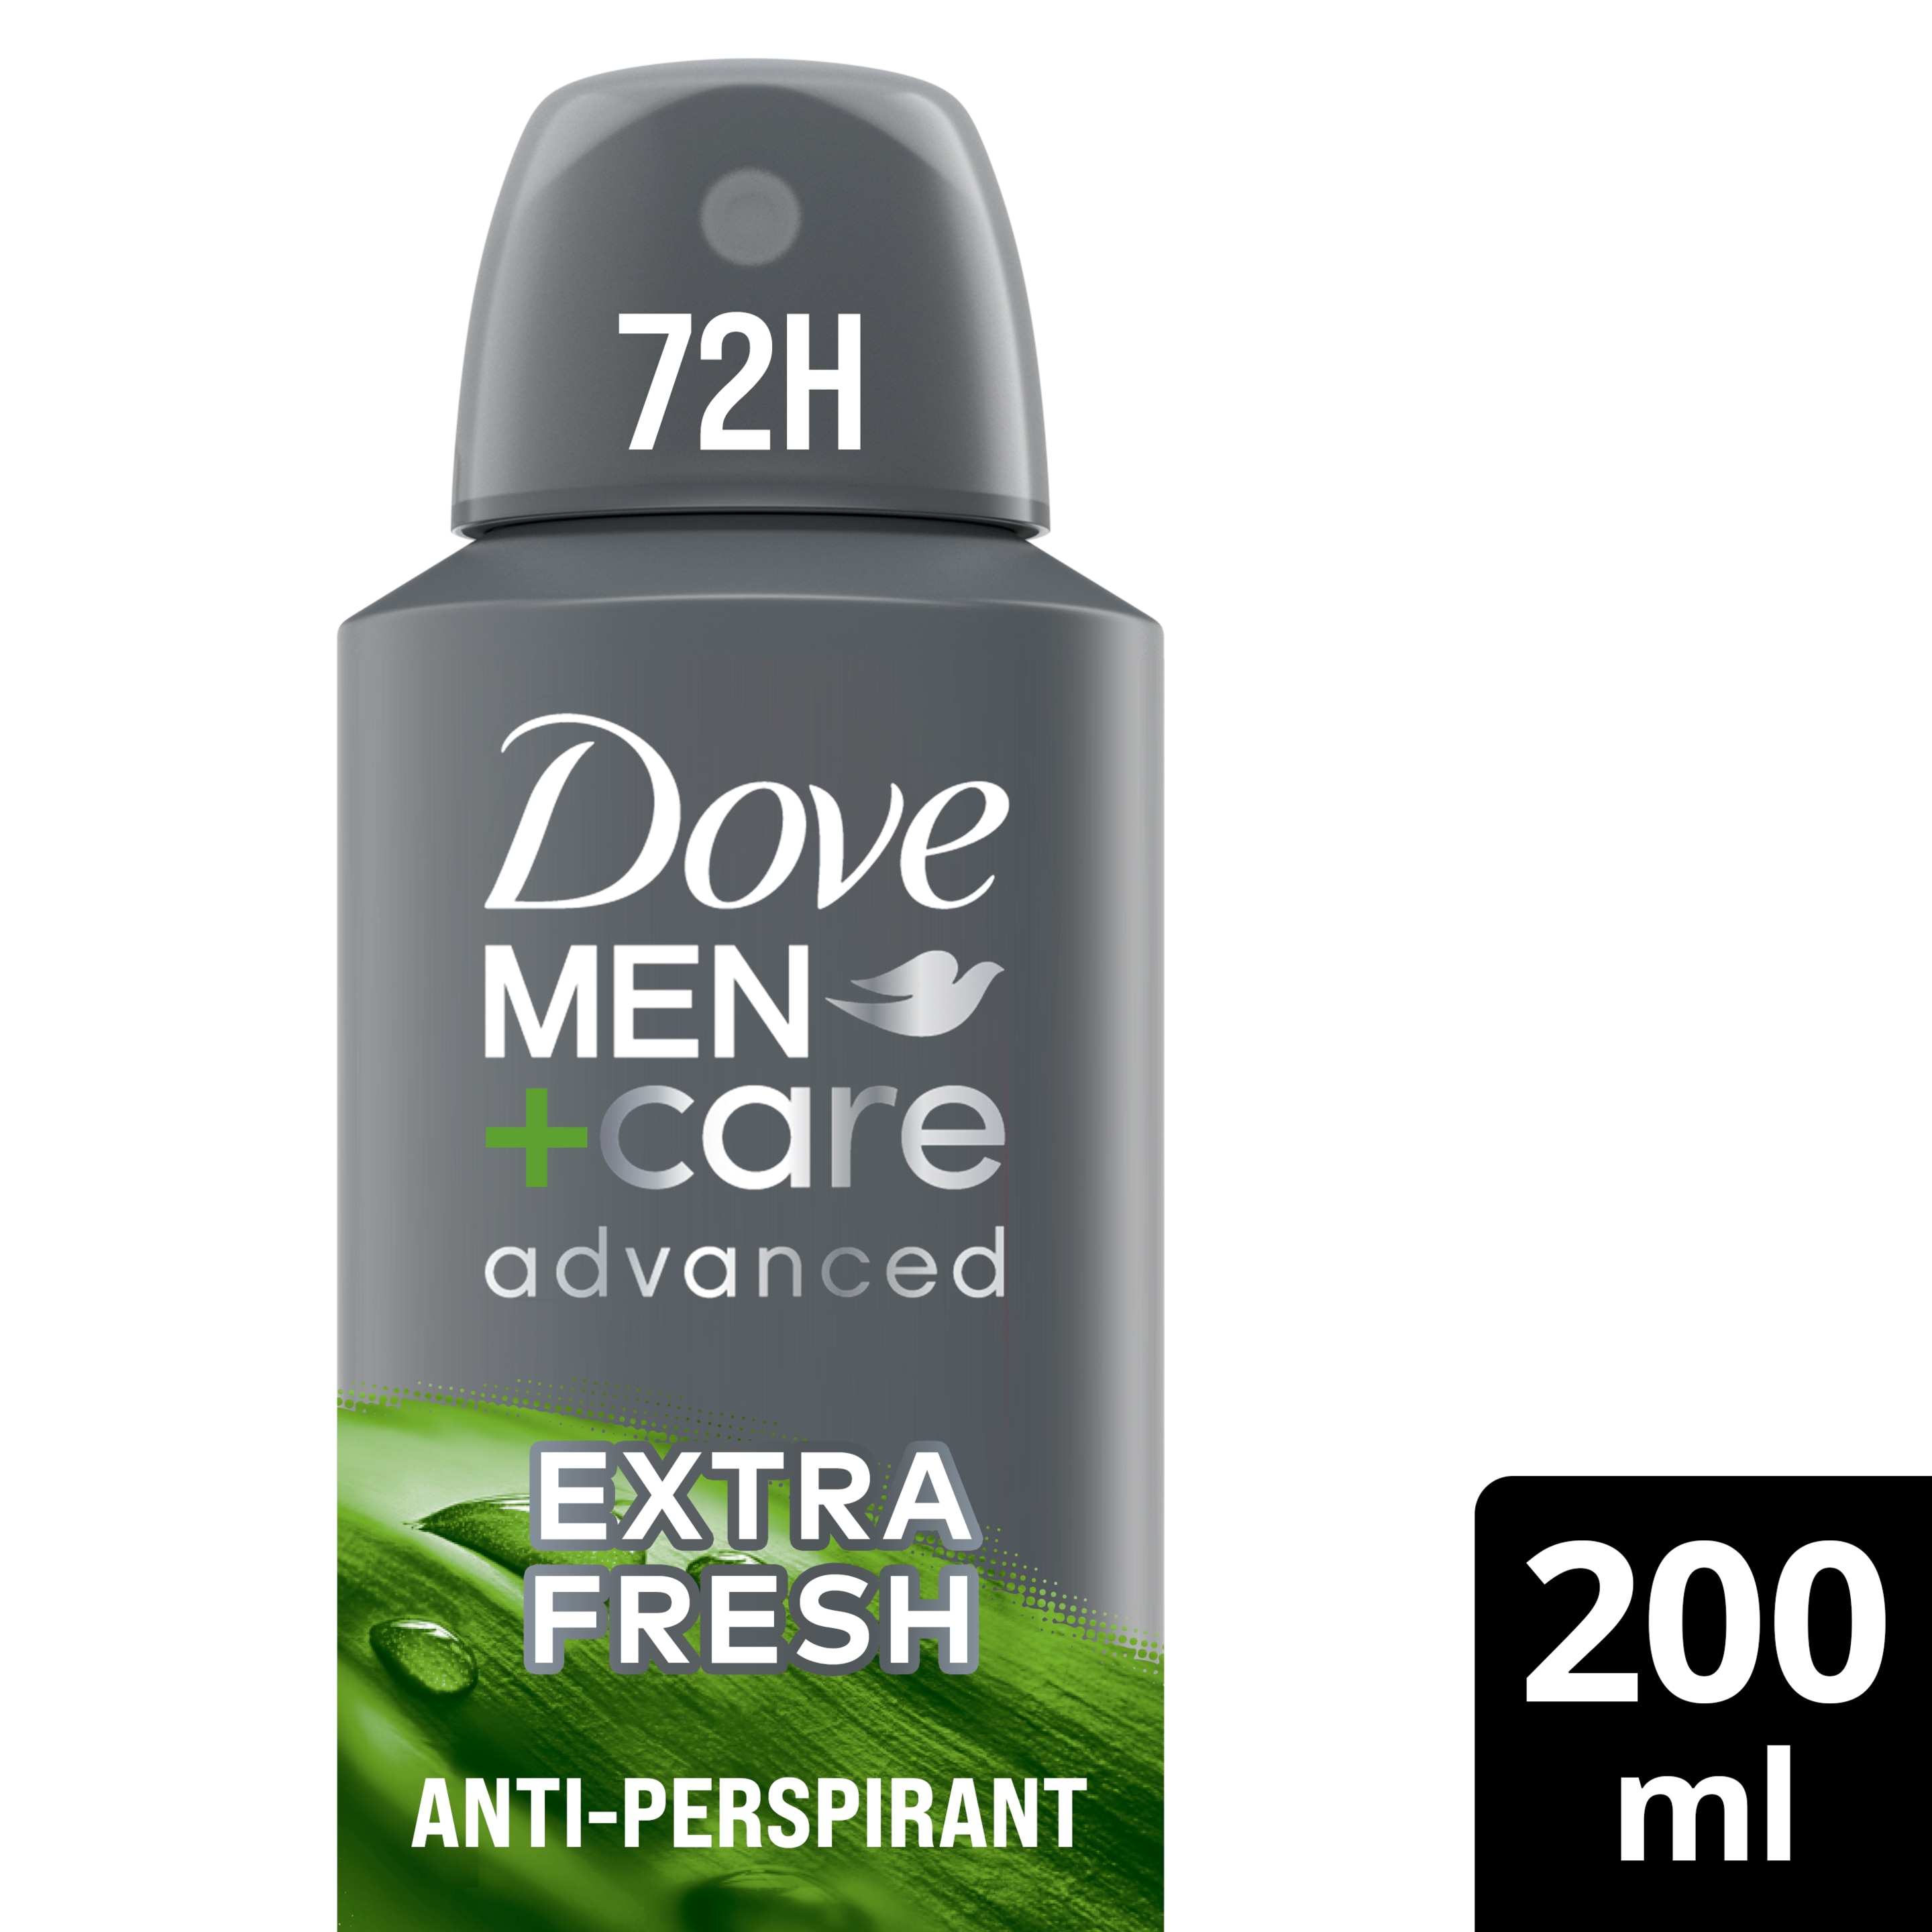 Dove Men+Care Advanced Extra Fresh Antiperspirant Deodorant Aerosol 200ml